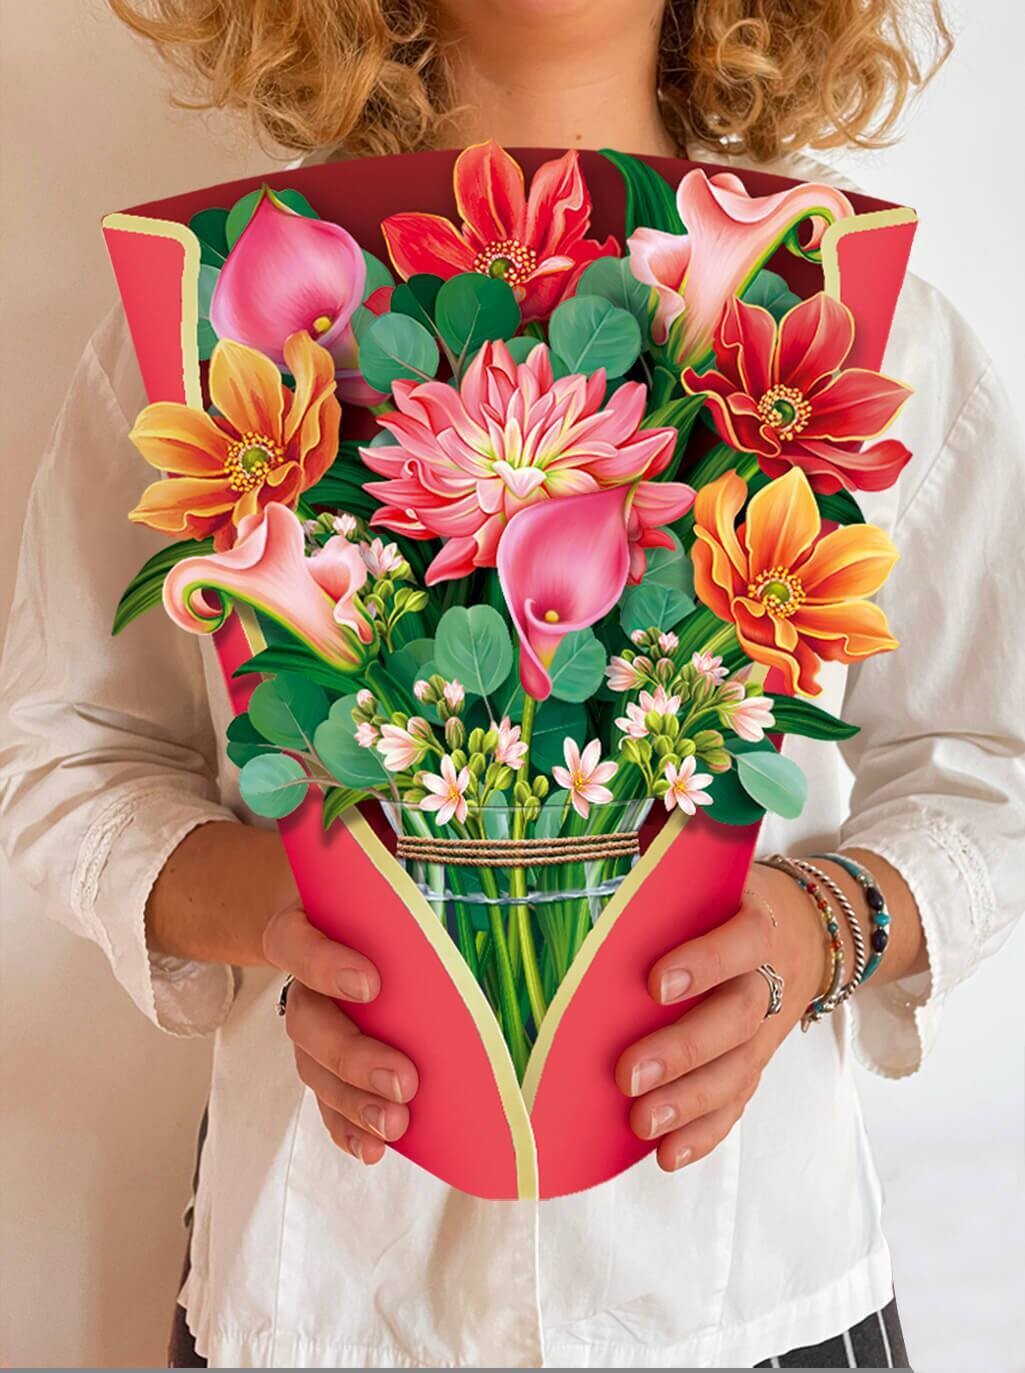 FP Dear Dahlia Flower Bouquet Greeting Card